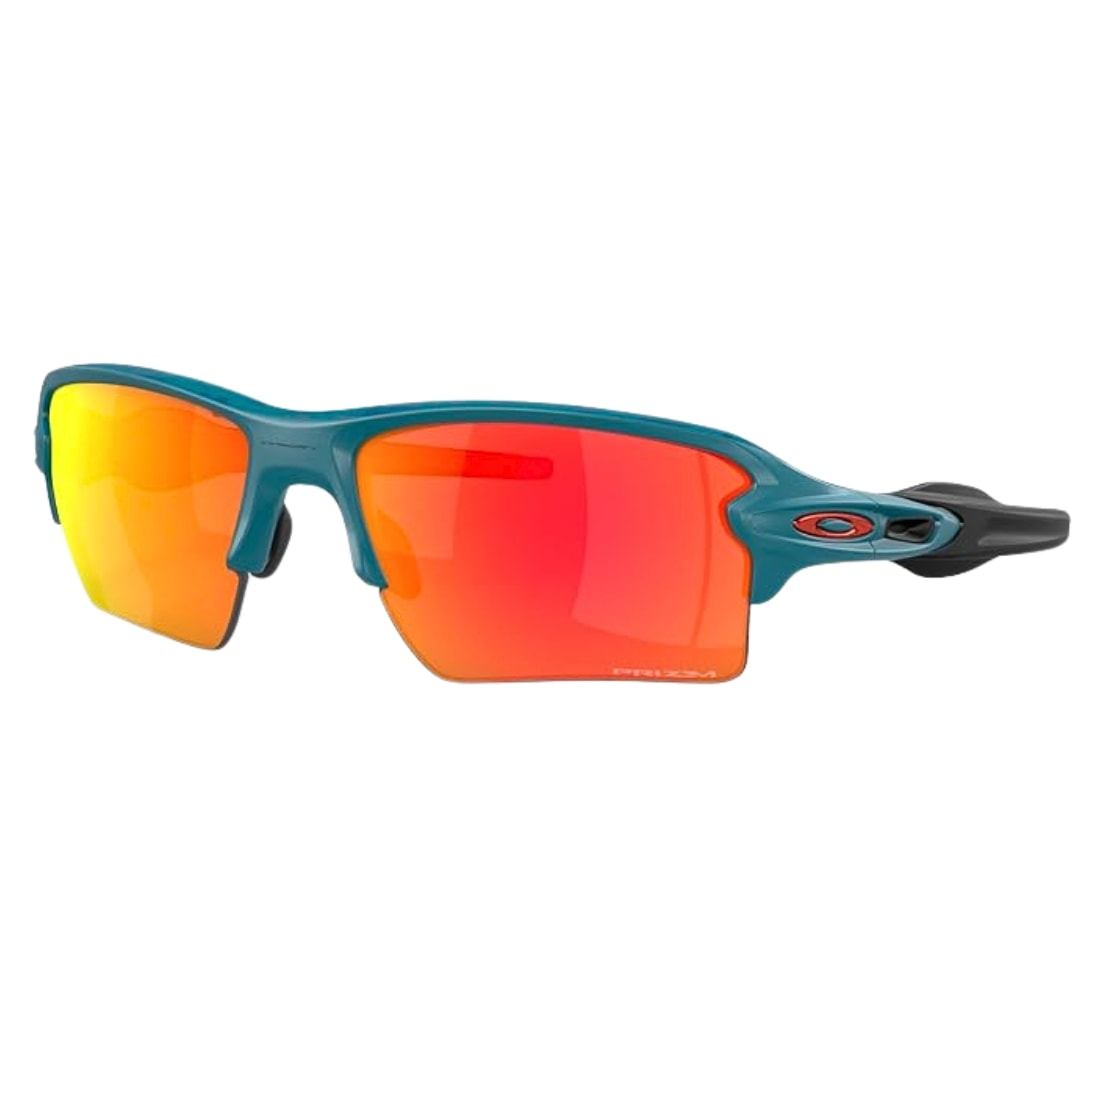 Oakley Flak 2.0 XL Sunglasses - Mattle Balsam/Prizm Ruby